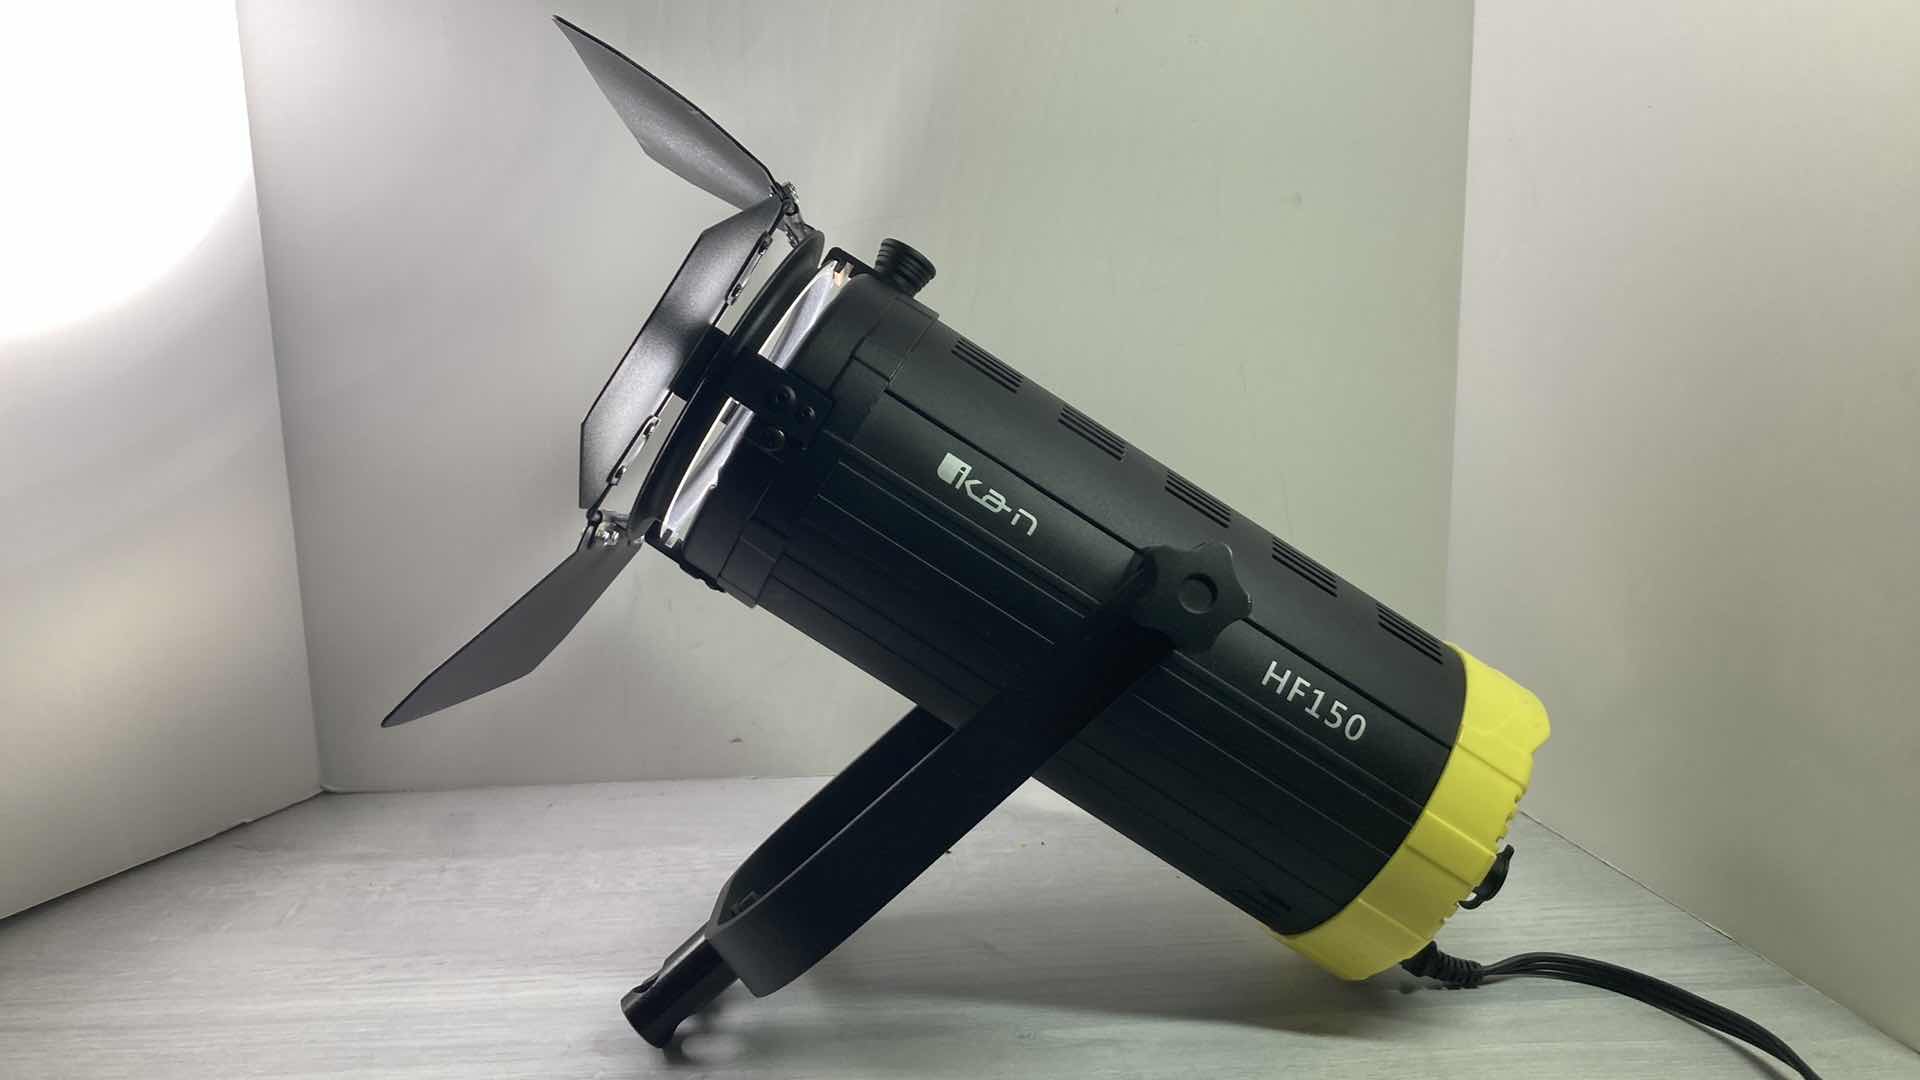 Photo 1 of IKAN HELIA FRESNEL BI-COLOR LED SPOT LIGHT MODEL HF150